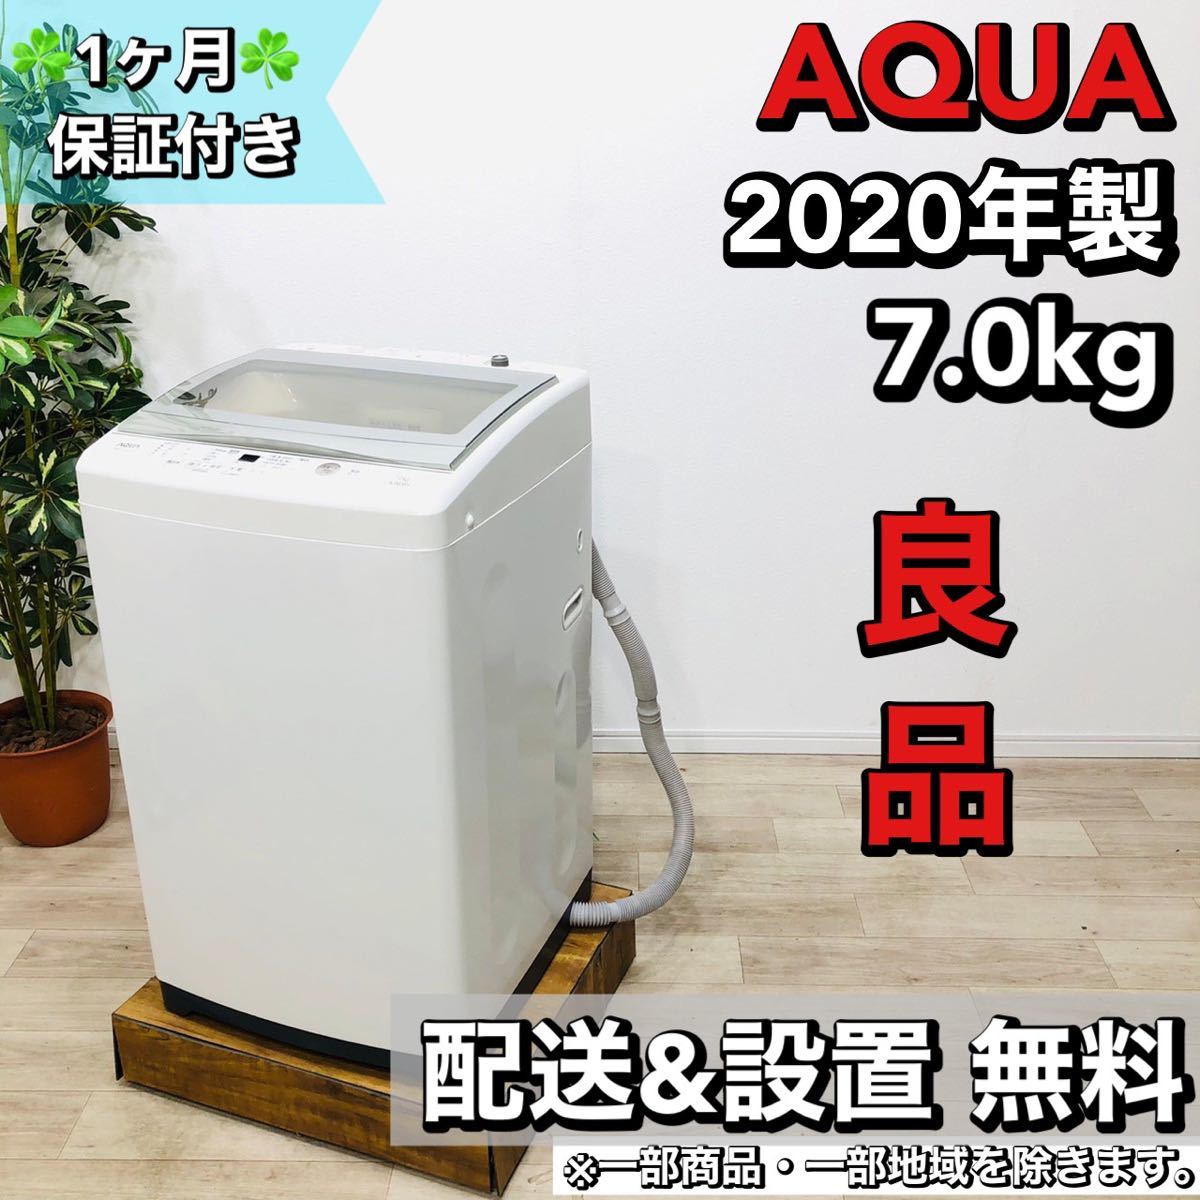 史上一番安い AQUA a1539 洗濯機 7.0kg 2020年製 9 5kg以上 ...